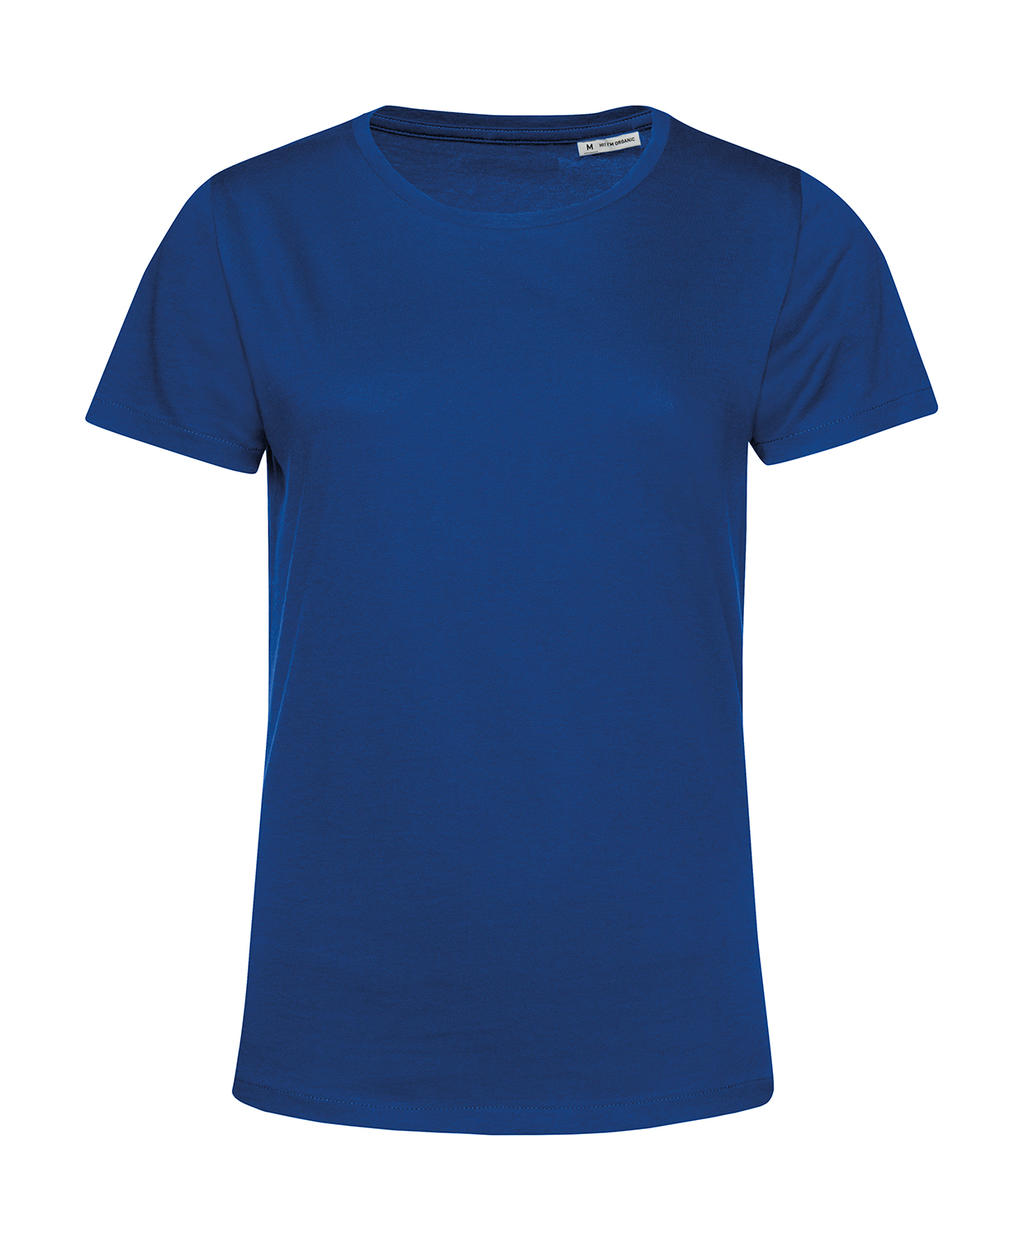 Tričko dámské BC Organic Inspire E150 - modré, 3XL